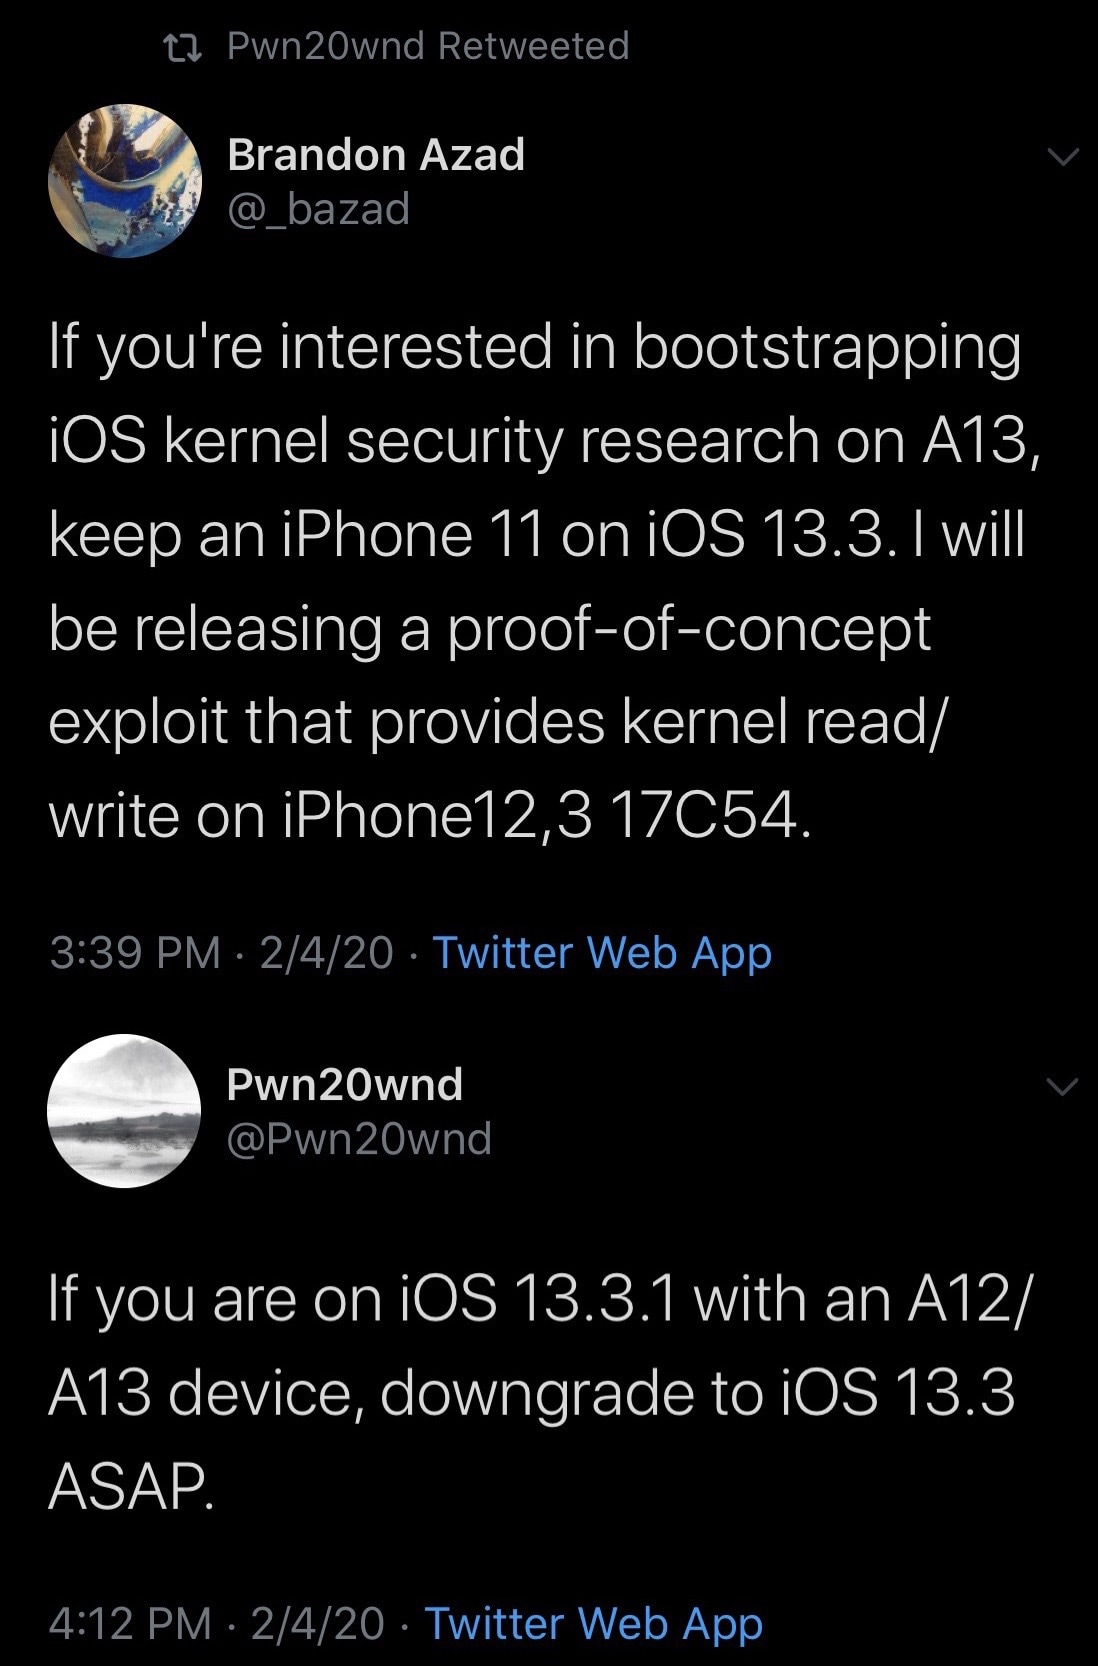 Brandon Azad berencana untuk meluncurkan exploit baru untuk iPhone 11 di iOS 13.3 3